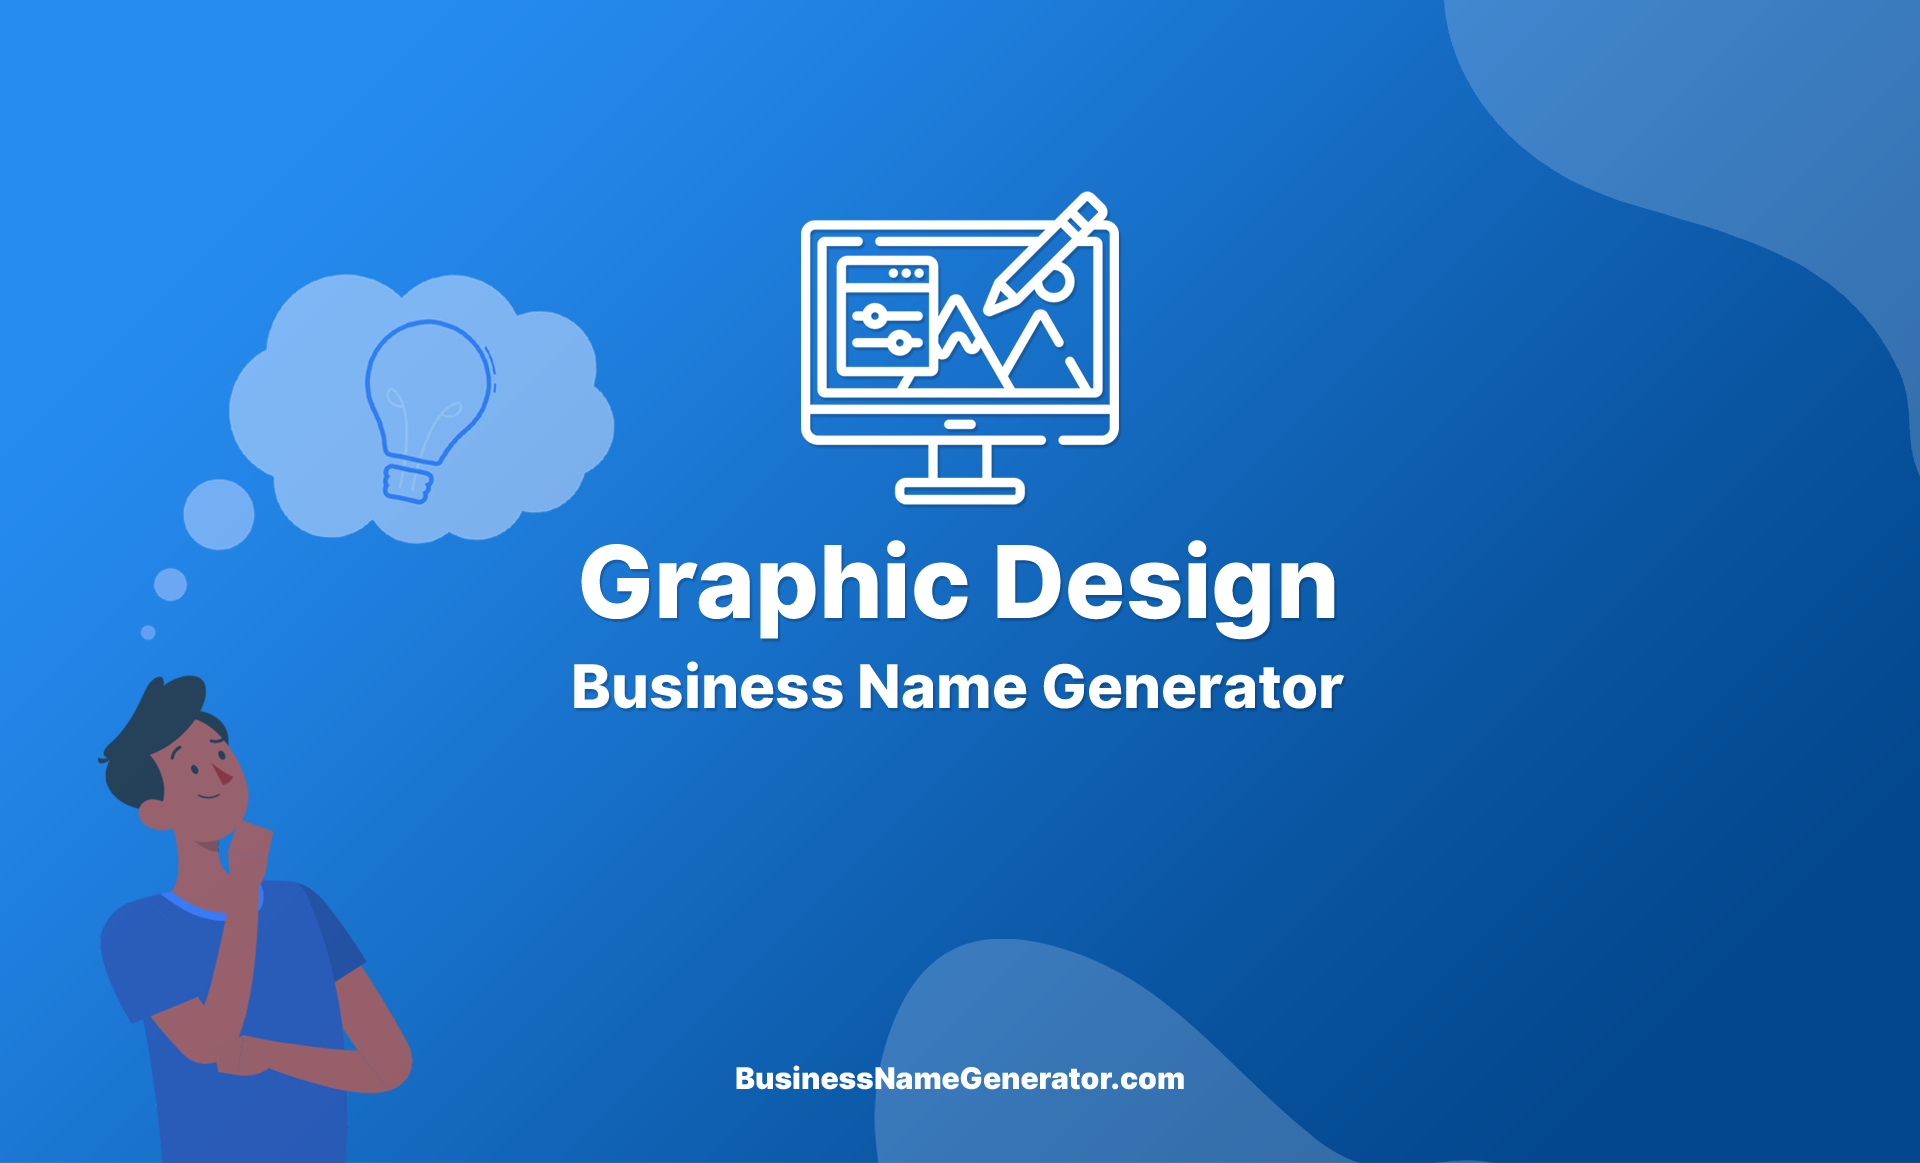 Graphic Design Business Name Generator